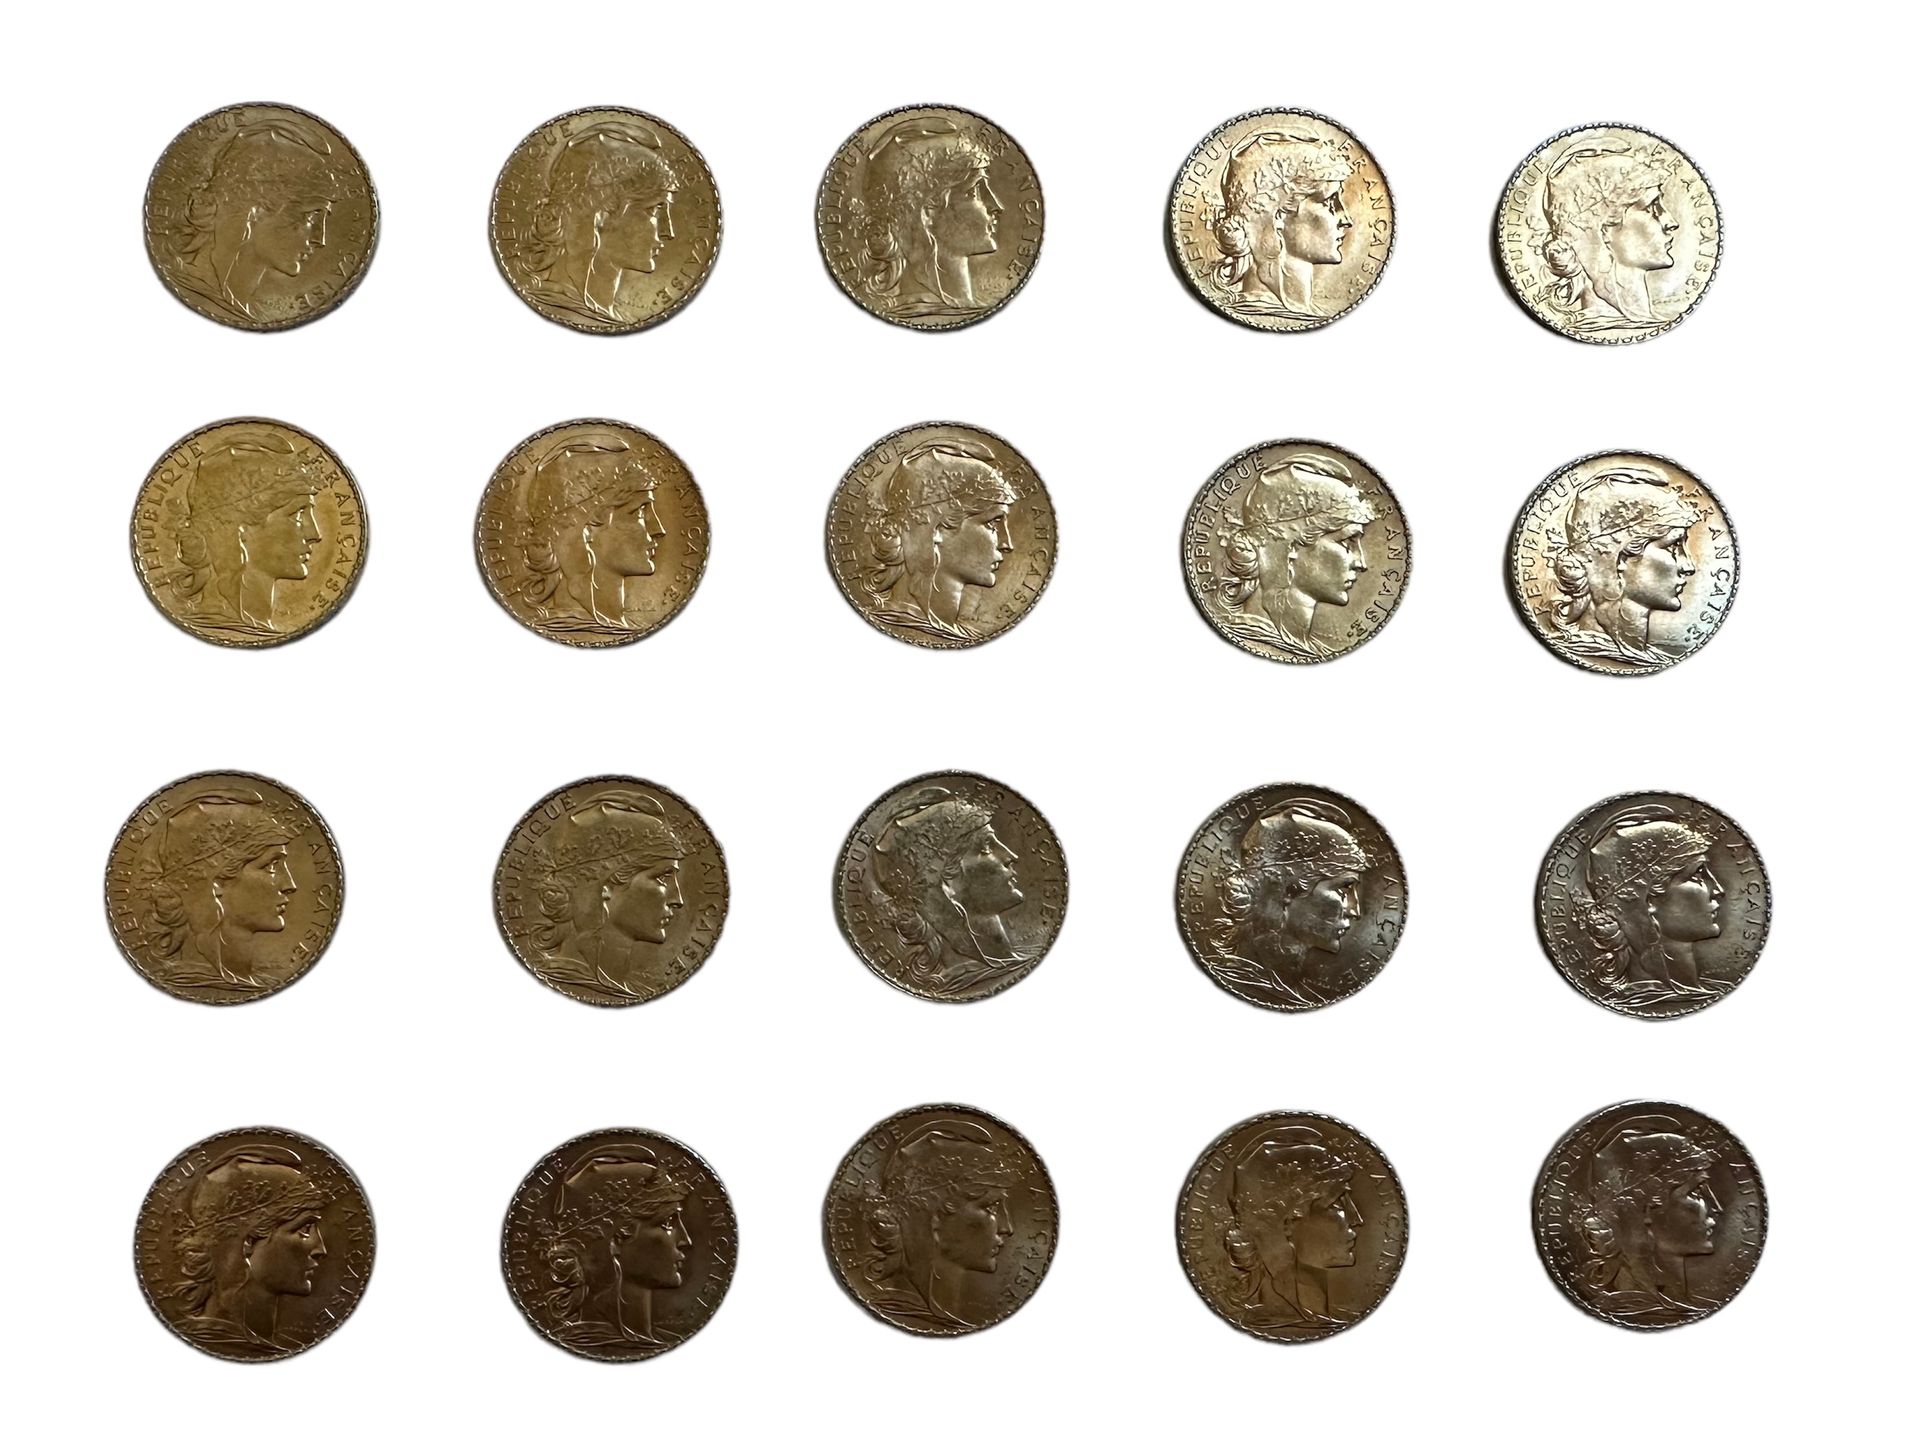 Null FRANCIA
20 monedas de 20 francos oro con gallo
Peso : 129 g